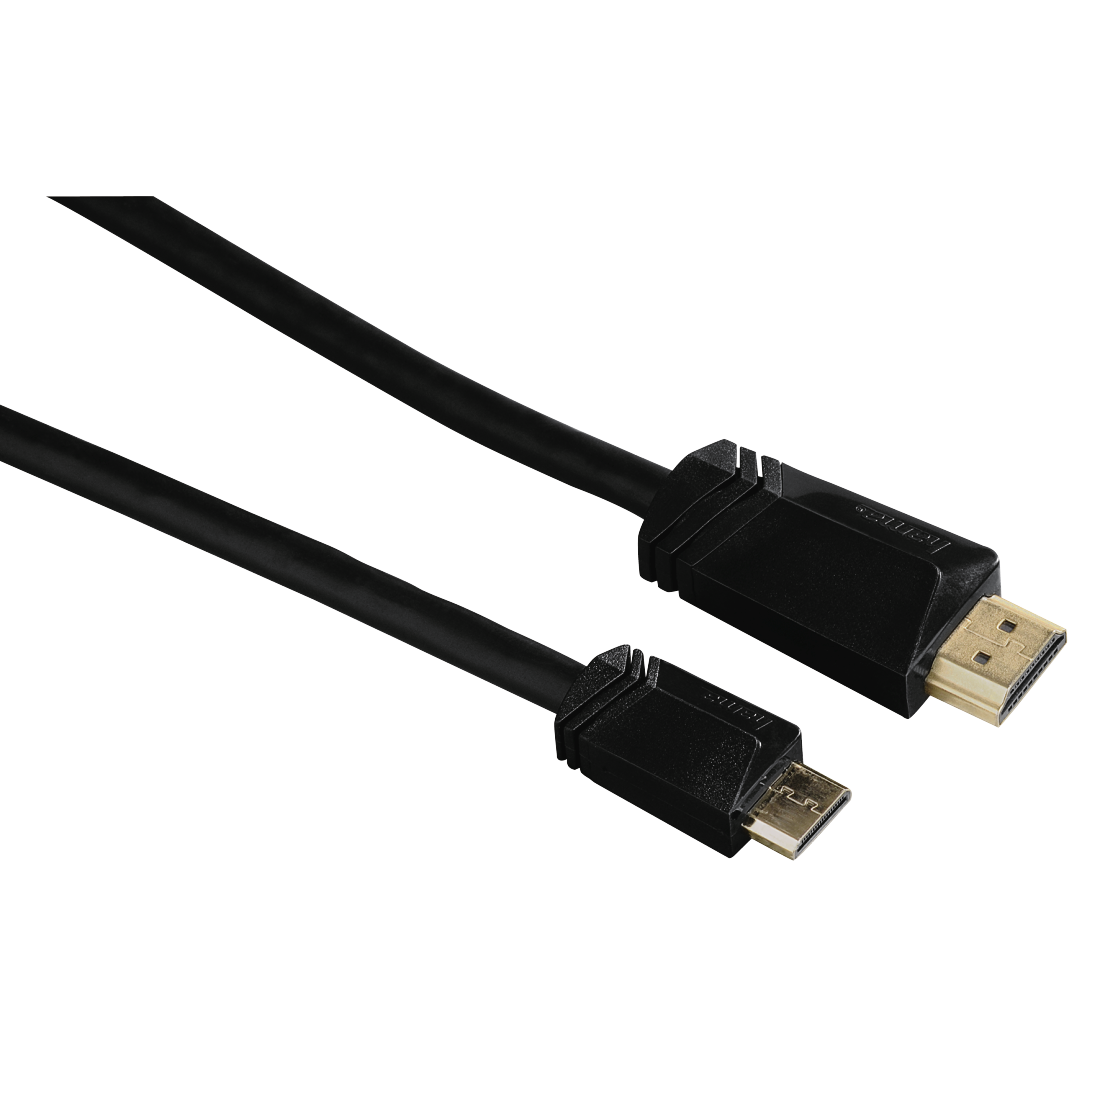 00125279 Hama High Speed Mini HDMI™ Cable, gold-plated, black, 1.50 m |  hama.com